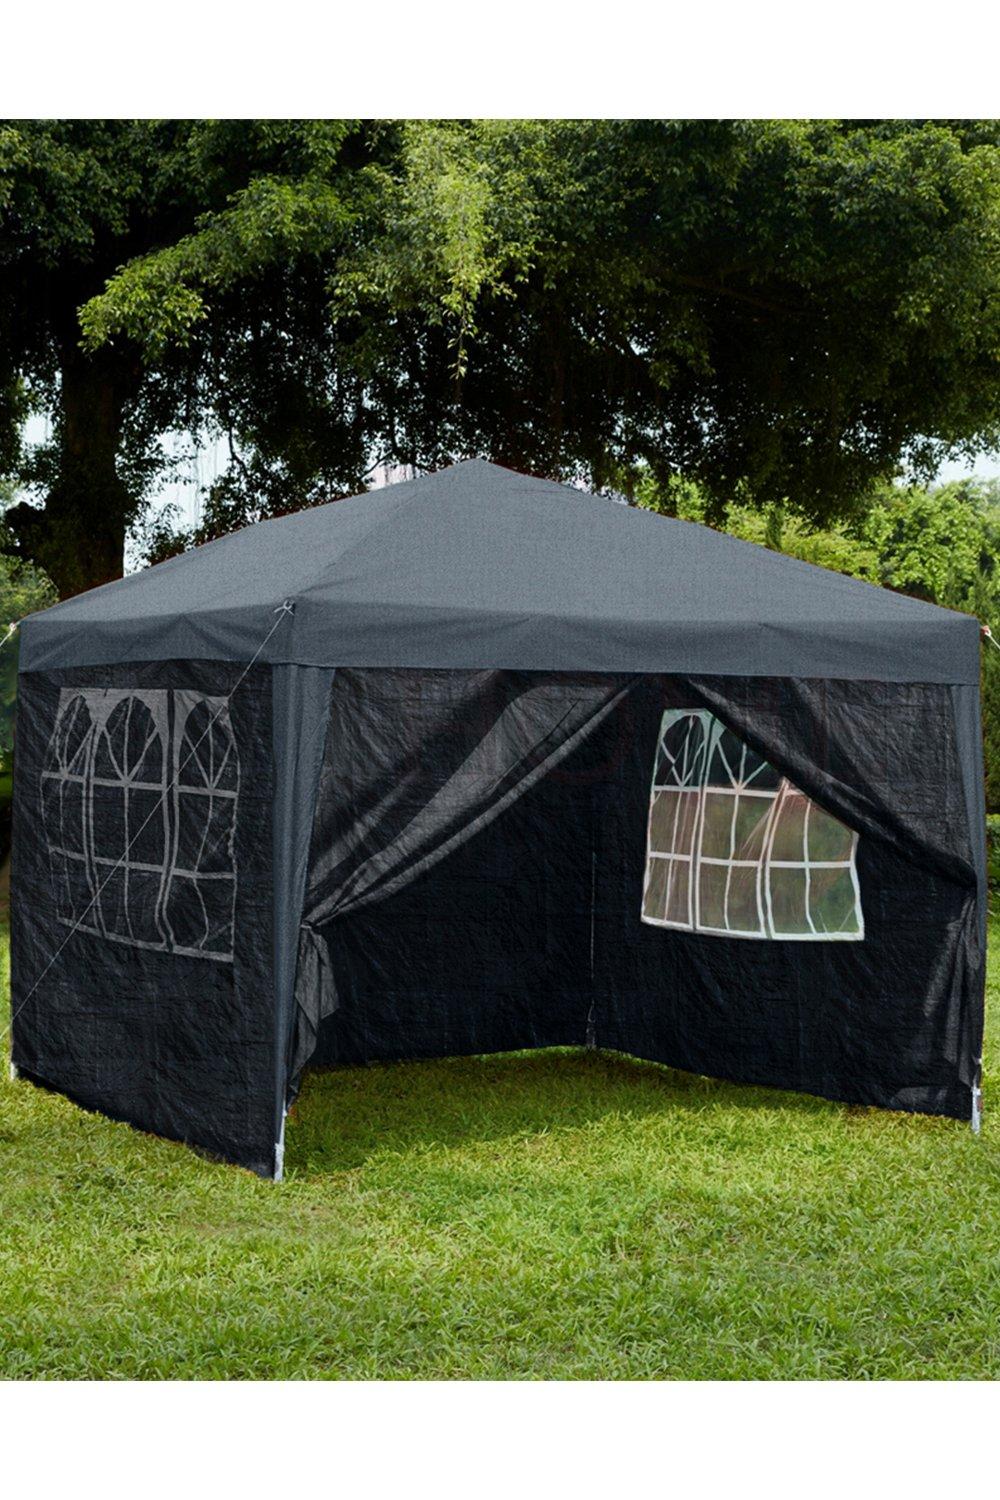 Garden Vida Pop Up Gazebo With Sides 2.5x2.5m Outdoor Garden Marquee Tent Canopy